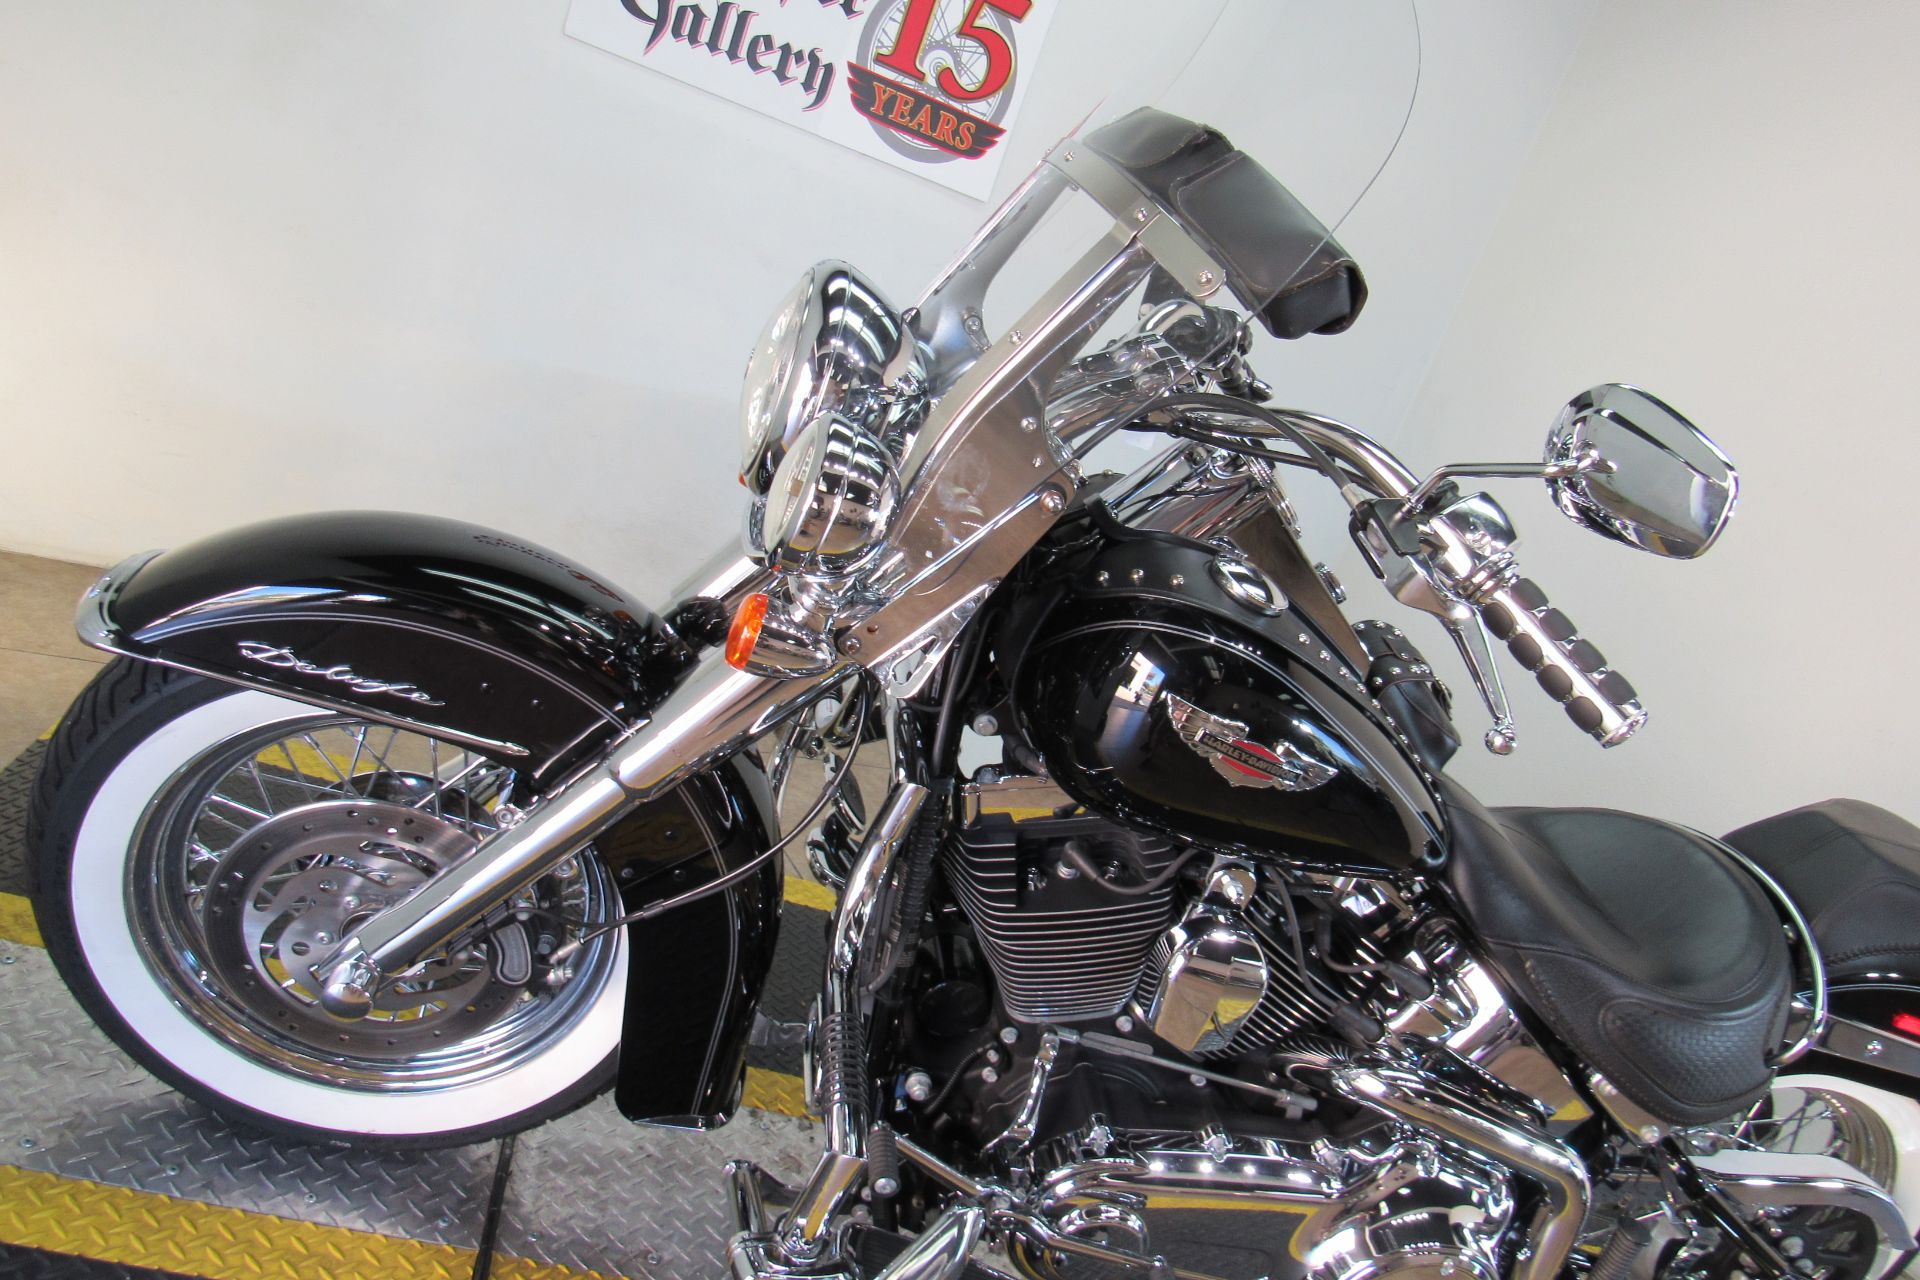 2014 Harley-Davidson Softail® Deluxe in Temecula, California - Photo 35